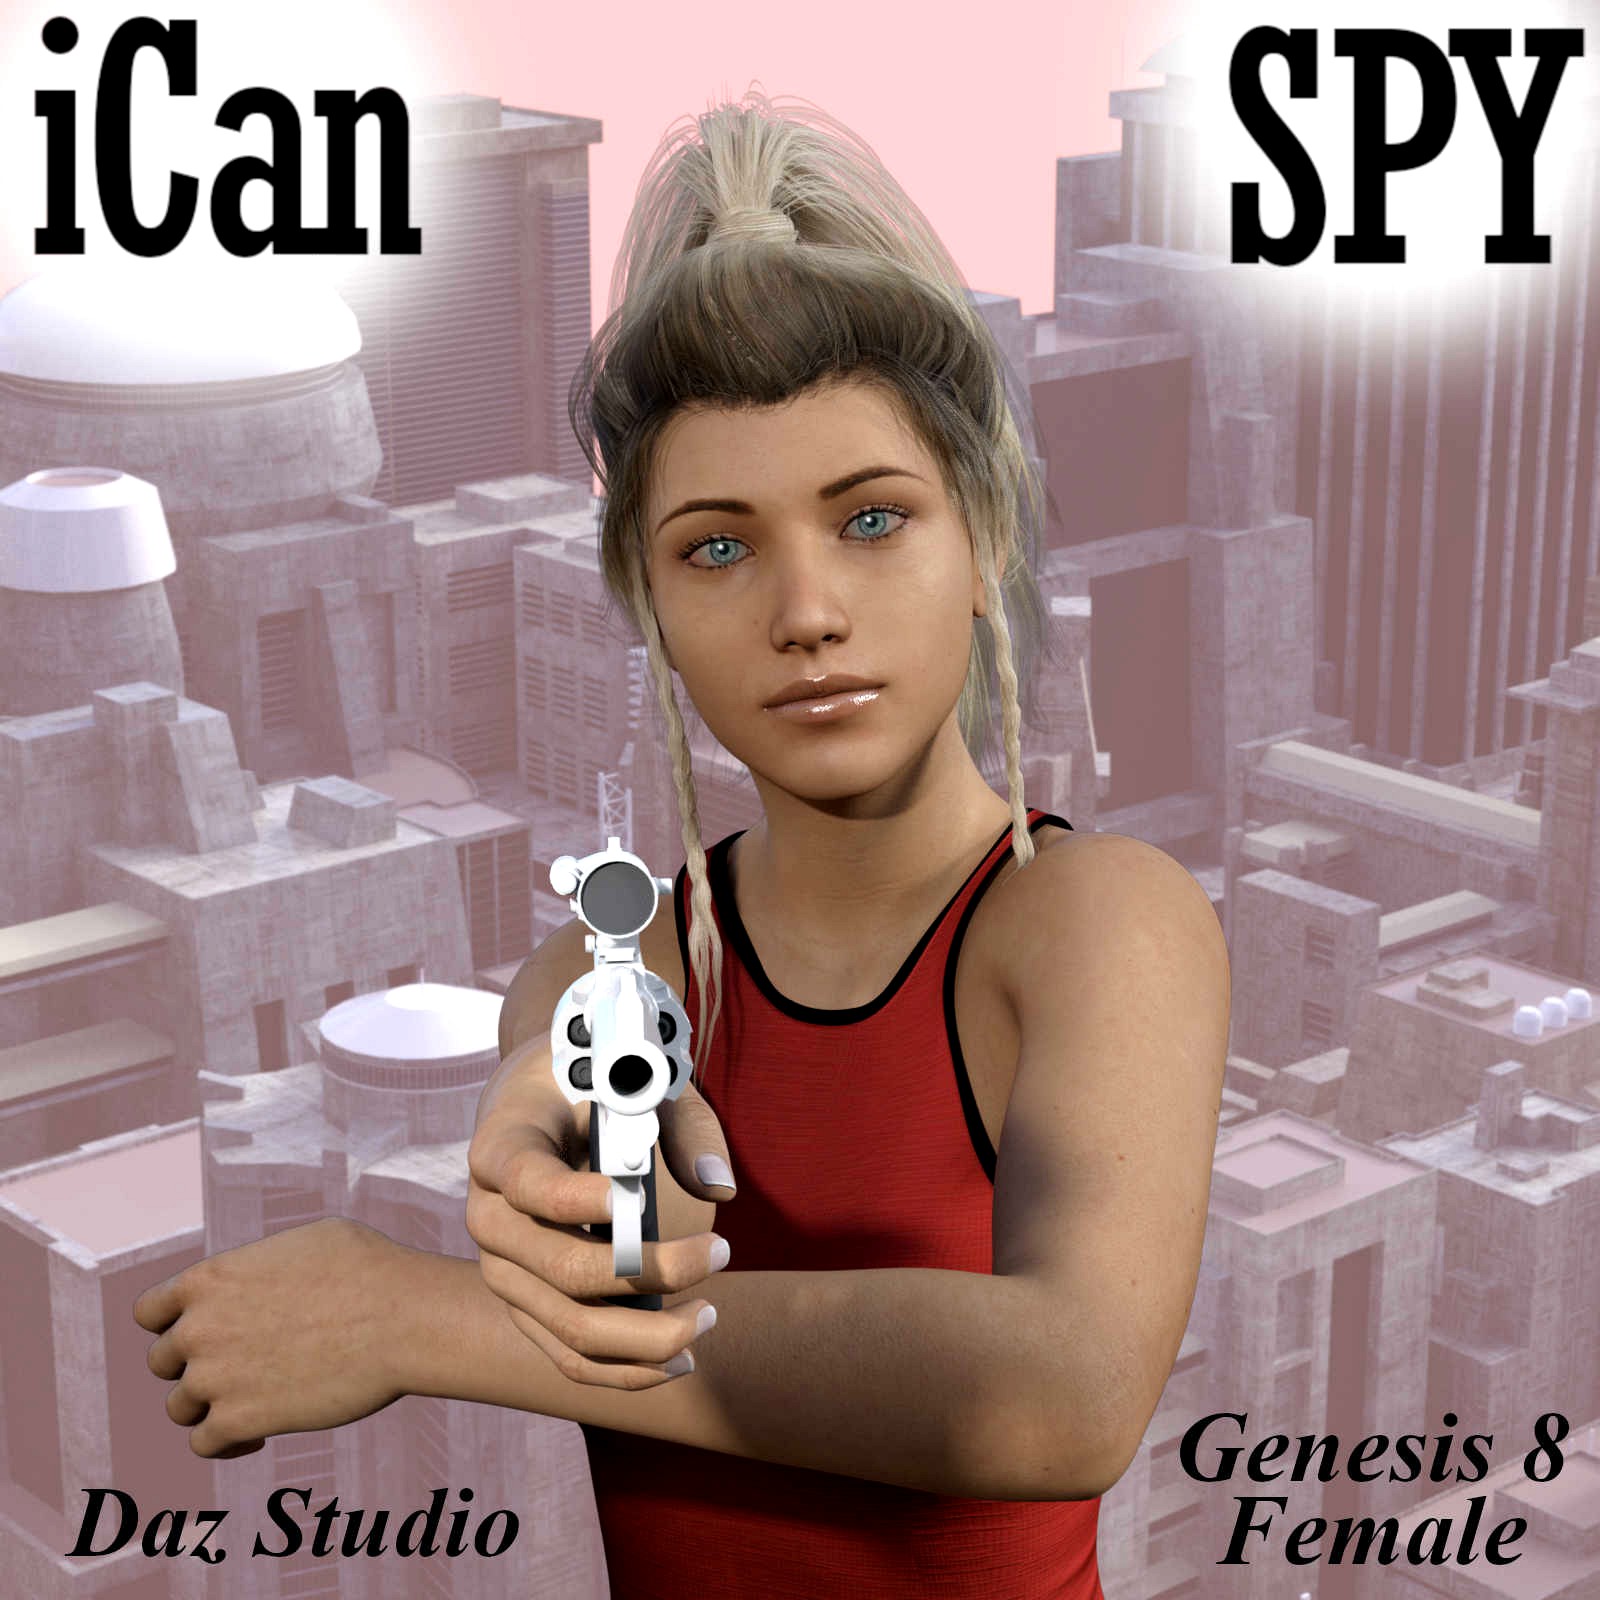 iCan SPY Poses for Genesis 8 Female (G8F) in Daz Studio